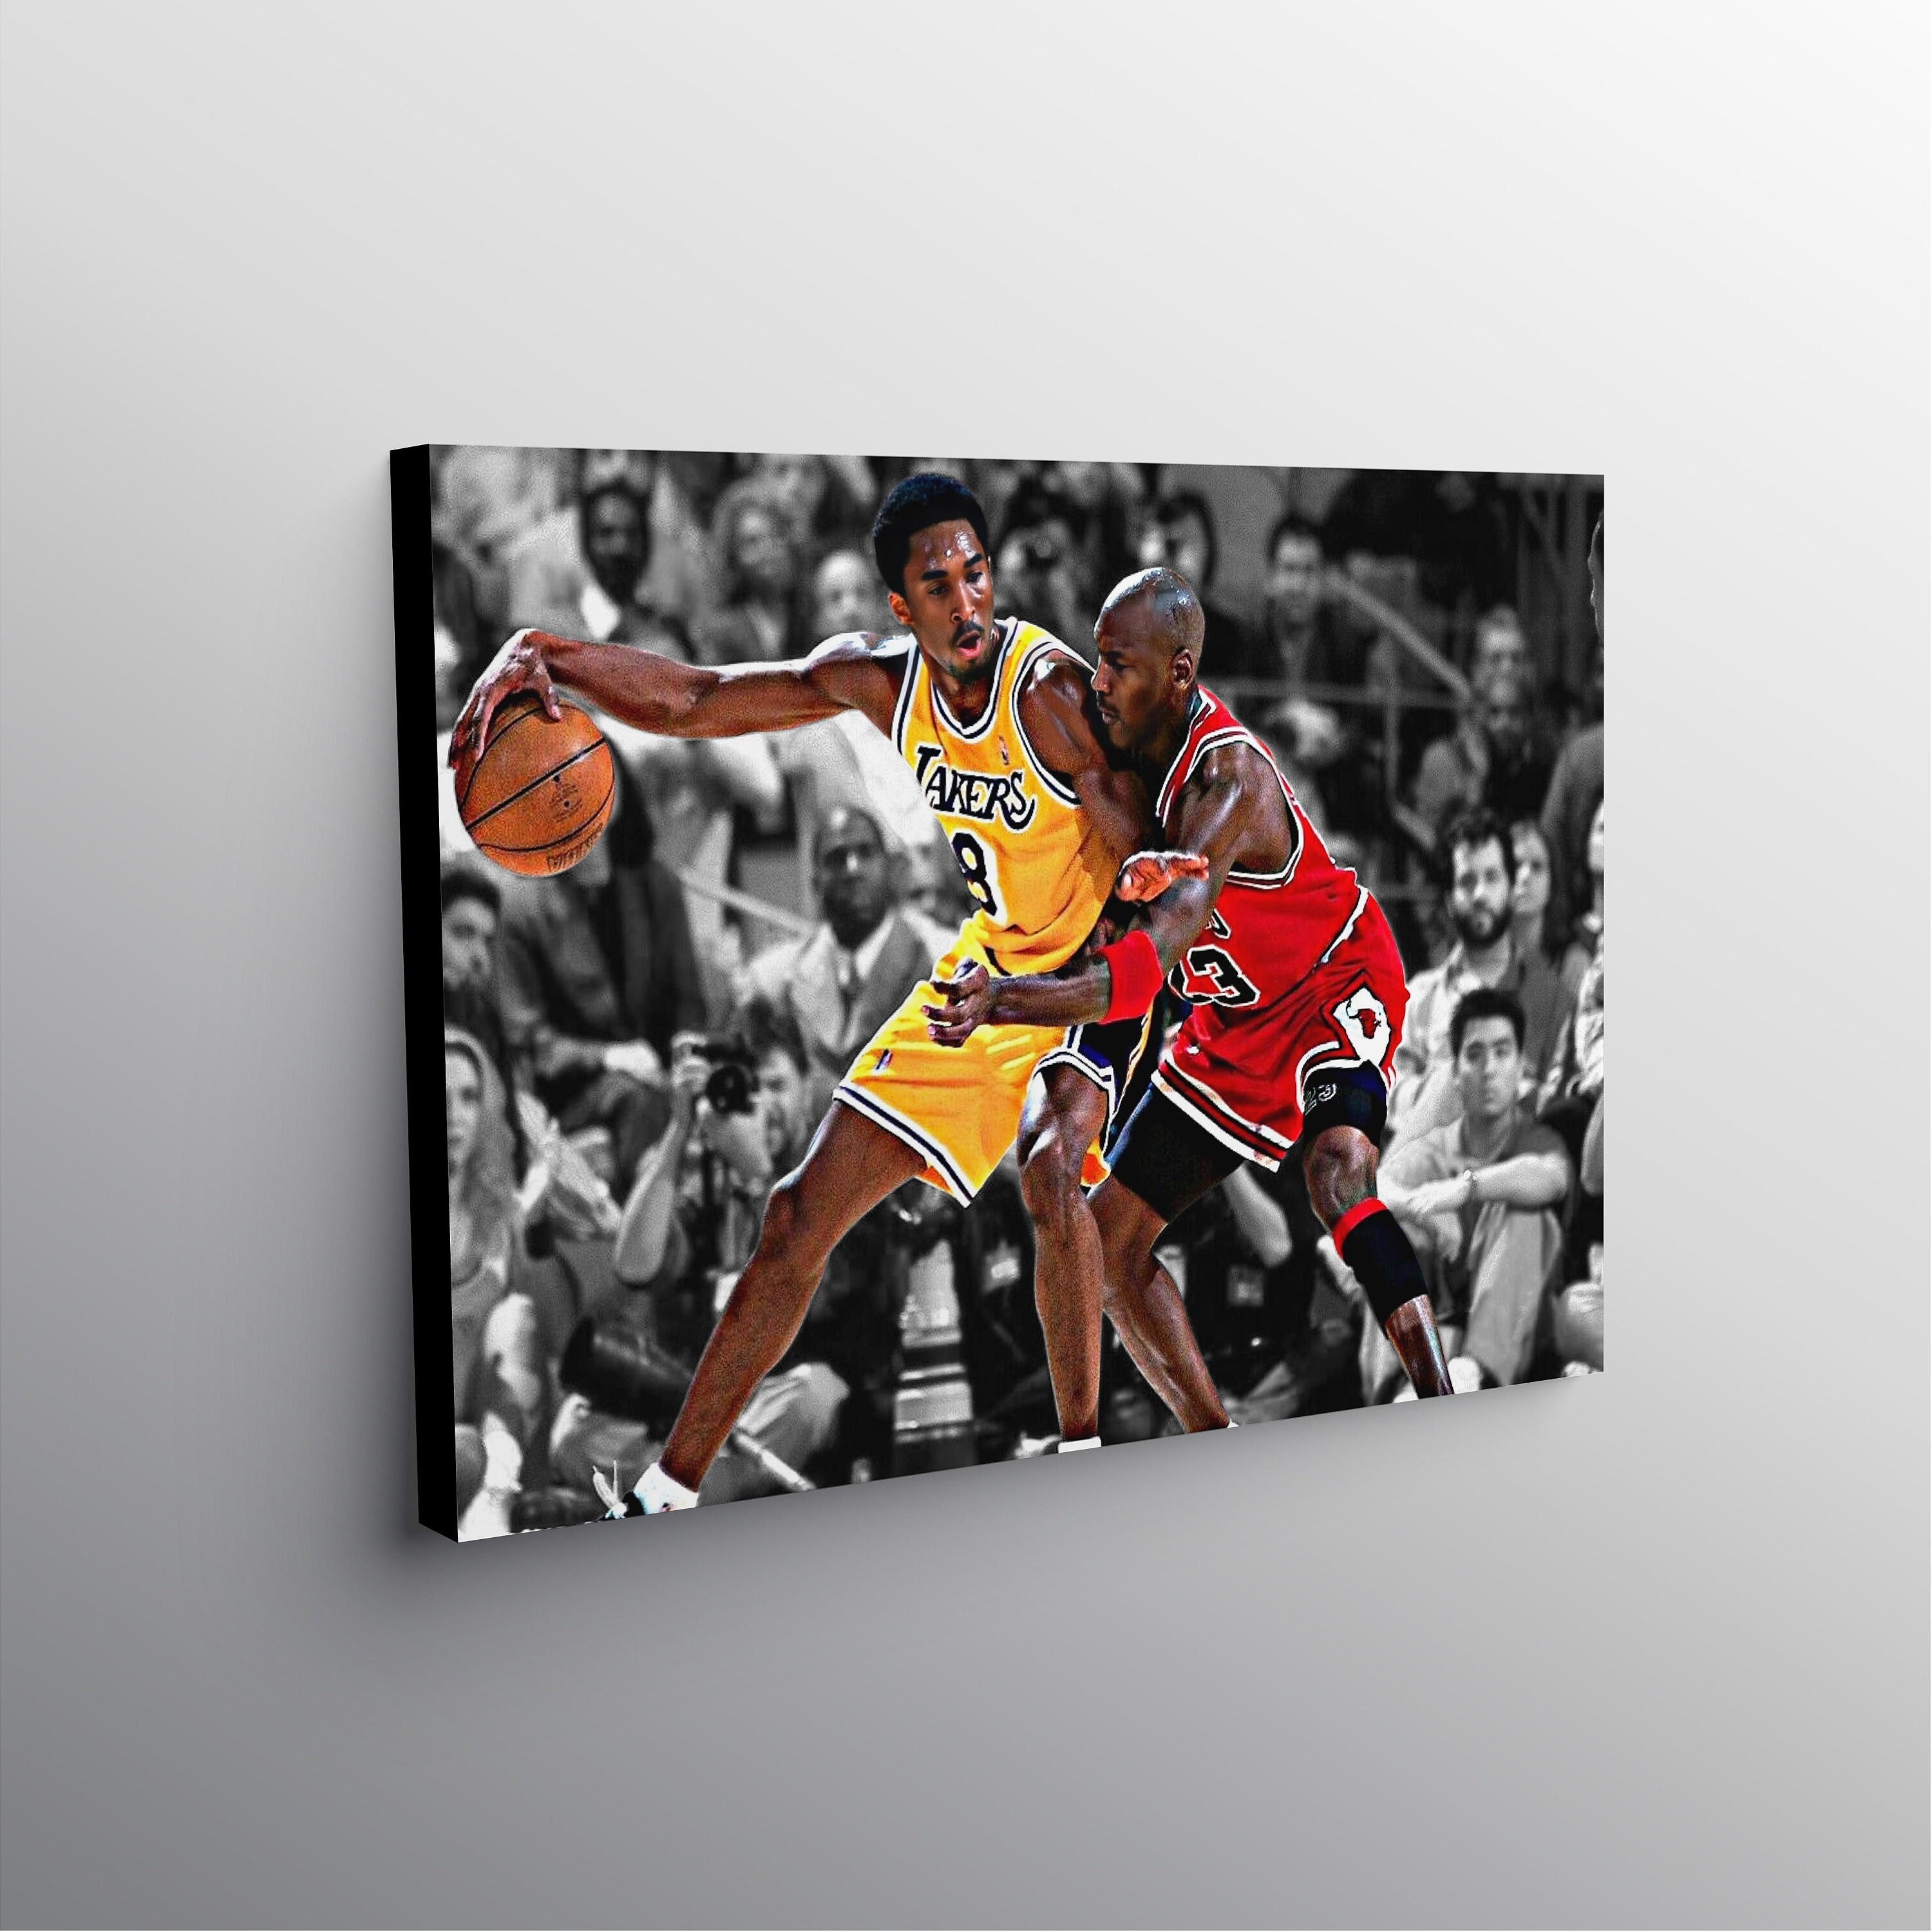 Important Michael Jordan, Kobe Bryant jerseys to be auctioned Jan. 20